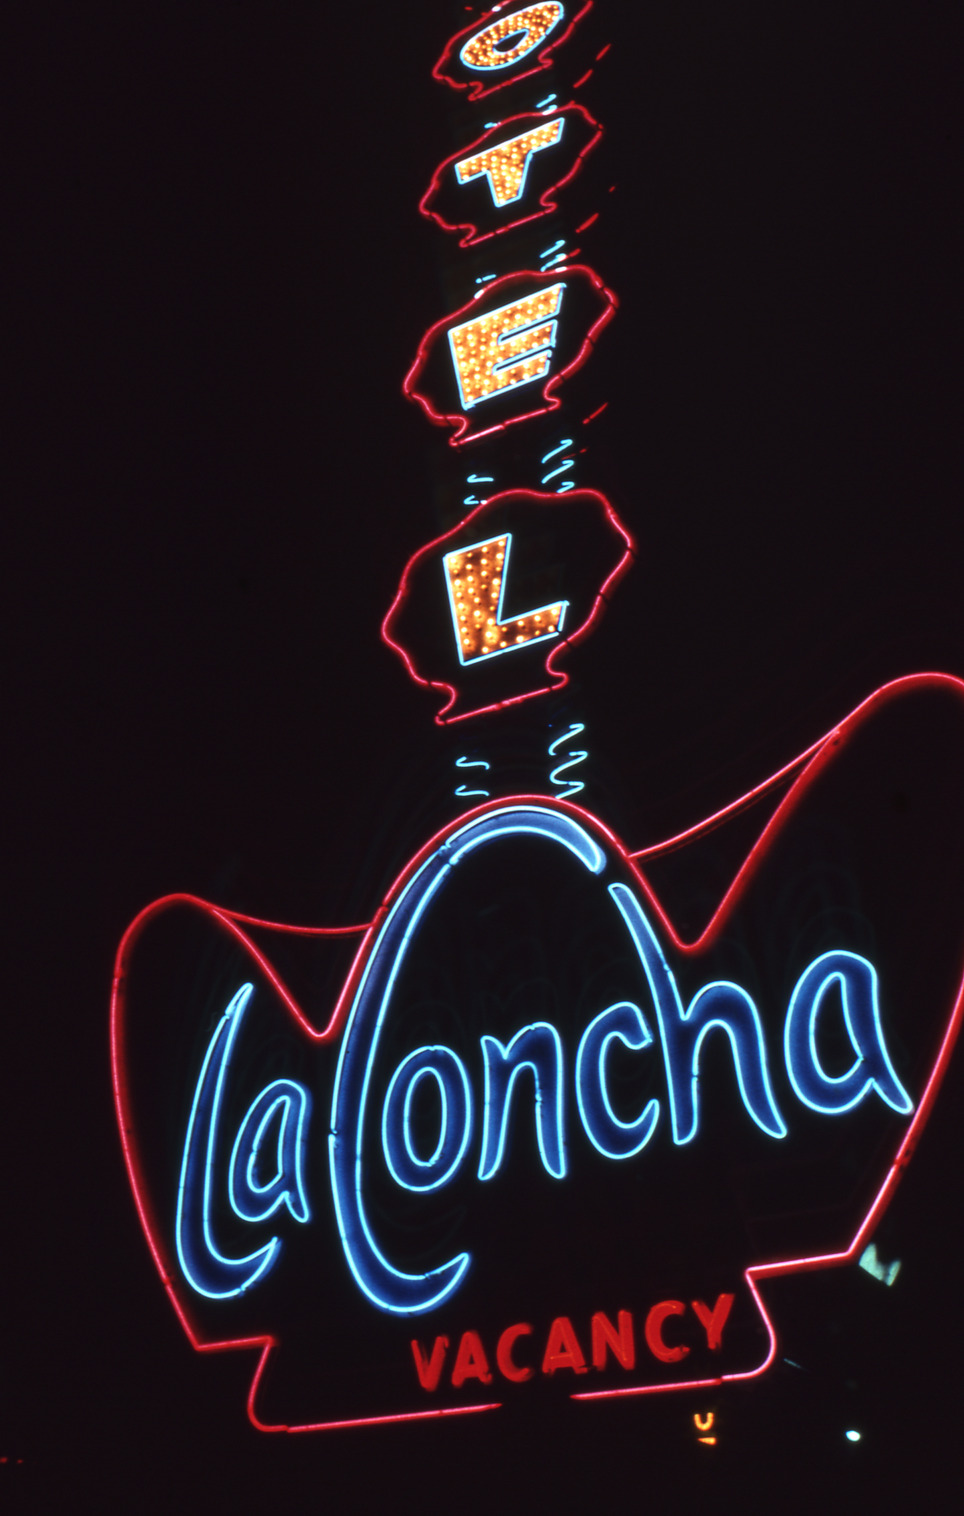 La Concha Motel monument sign, Las Vegas, Nevada: photographic print